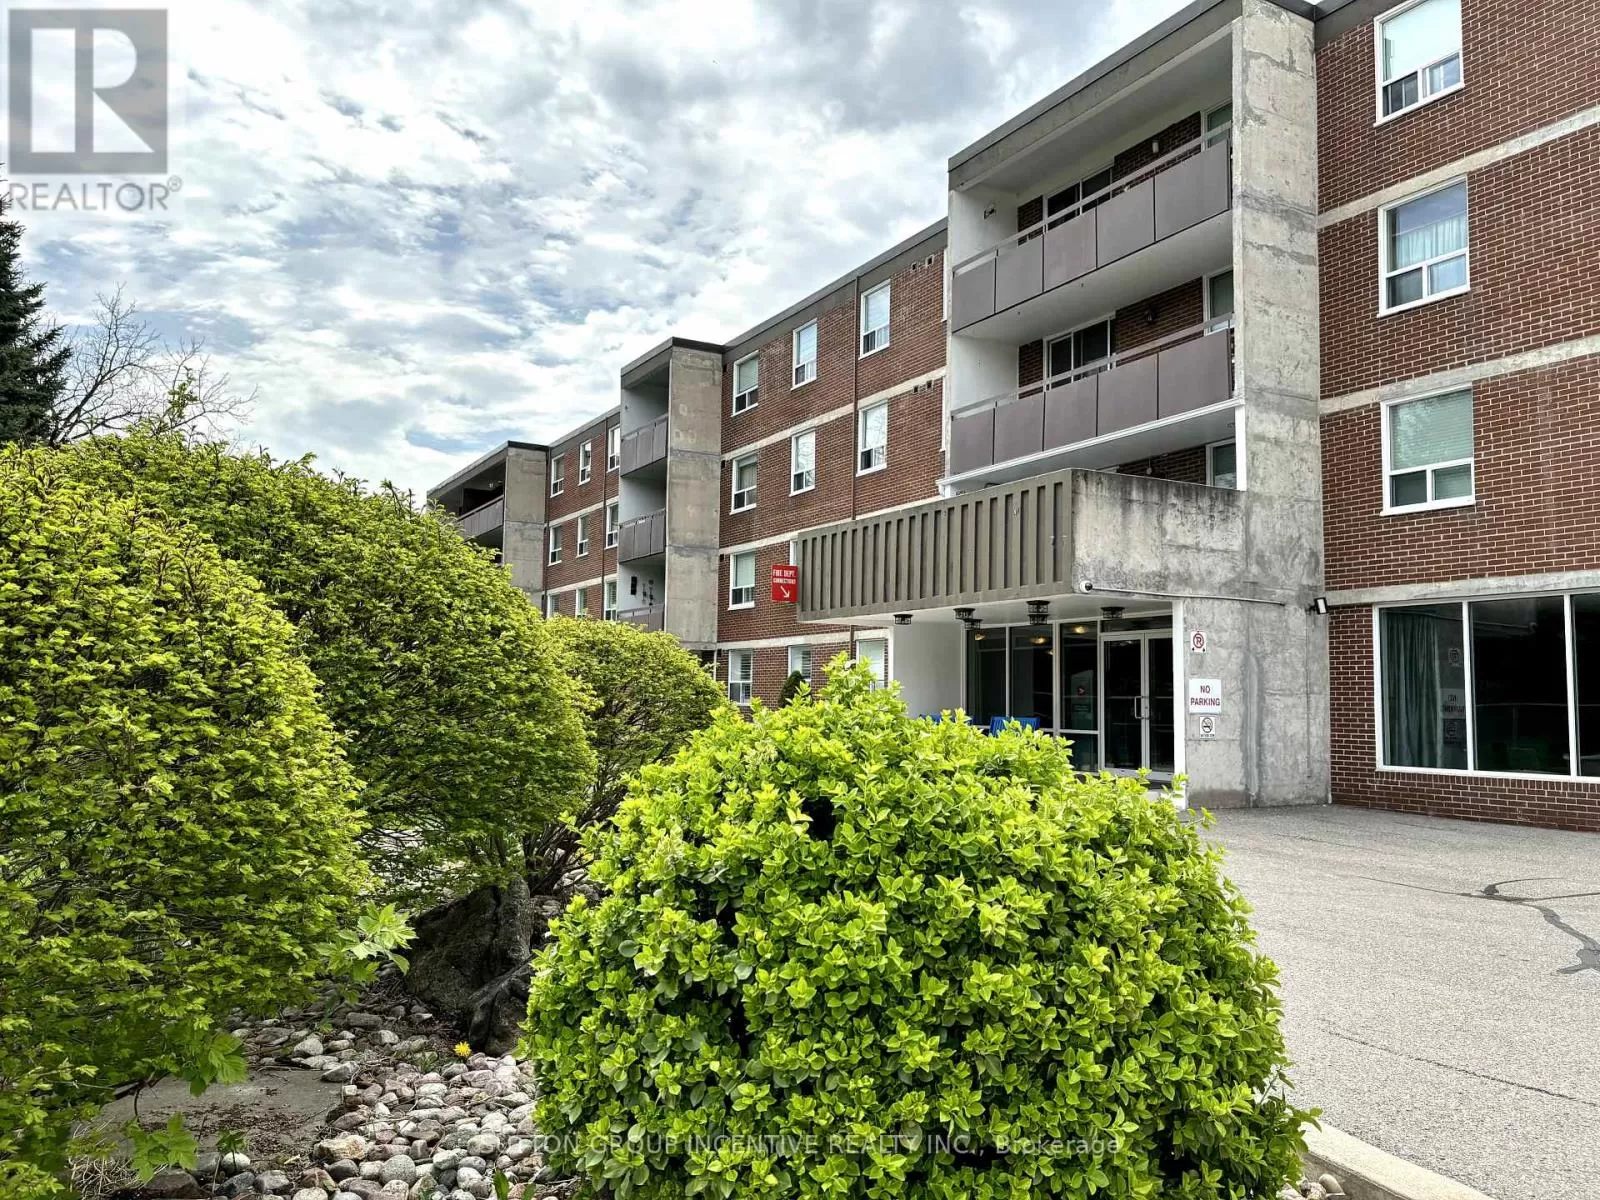 Apartment for rent: 311 - 200 Holland Court, Bradford West Gwillimbury, Ontario L3Z 1R8